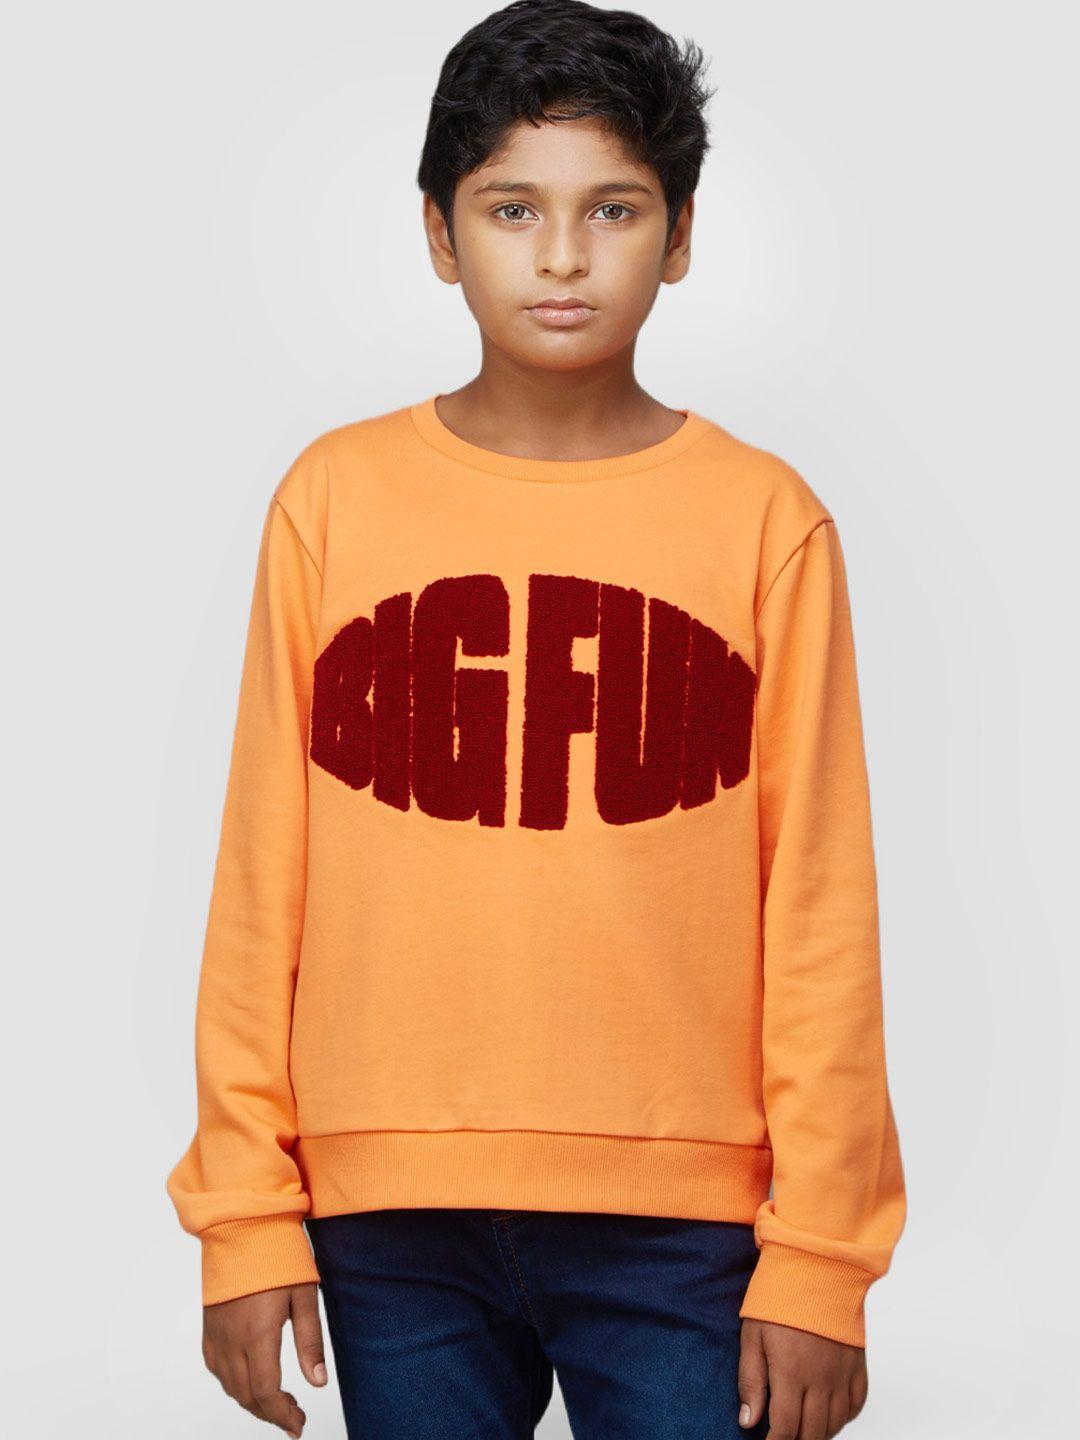 zalio boys orange printed sweatshirt